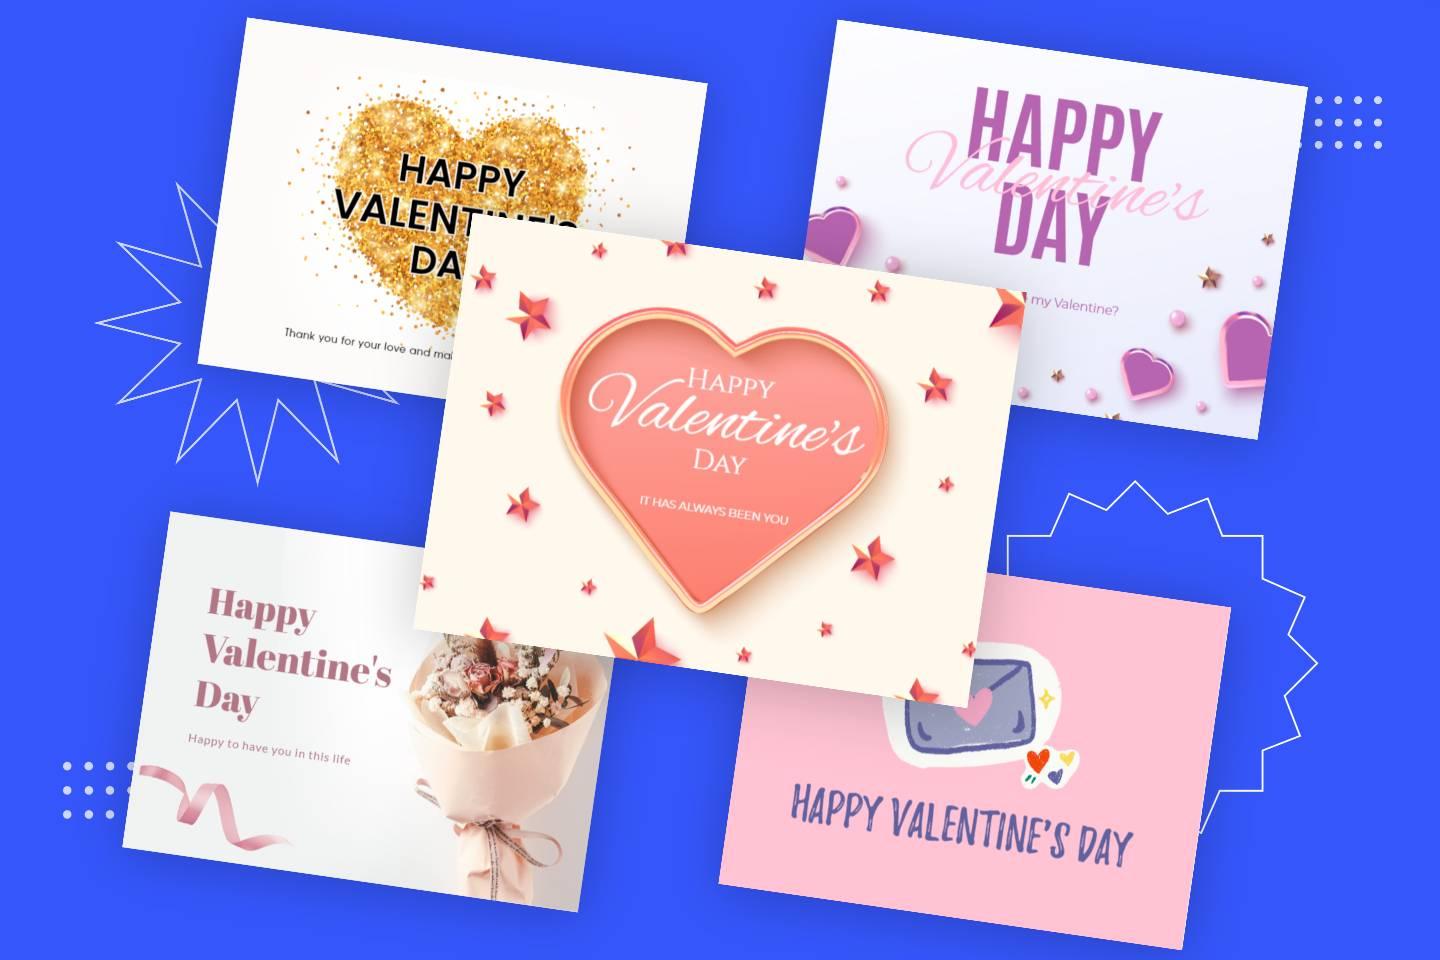 Fotorバレンタインカードメーカーでバレンタインカードをオンラインで無料作成